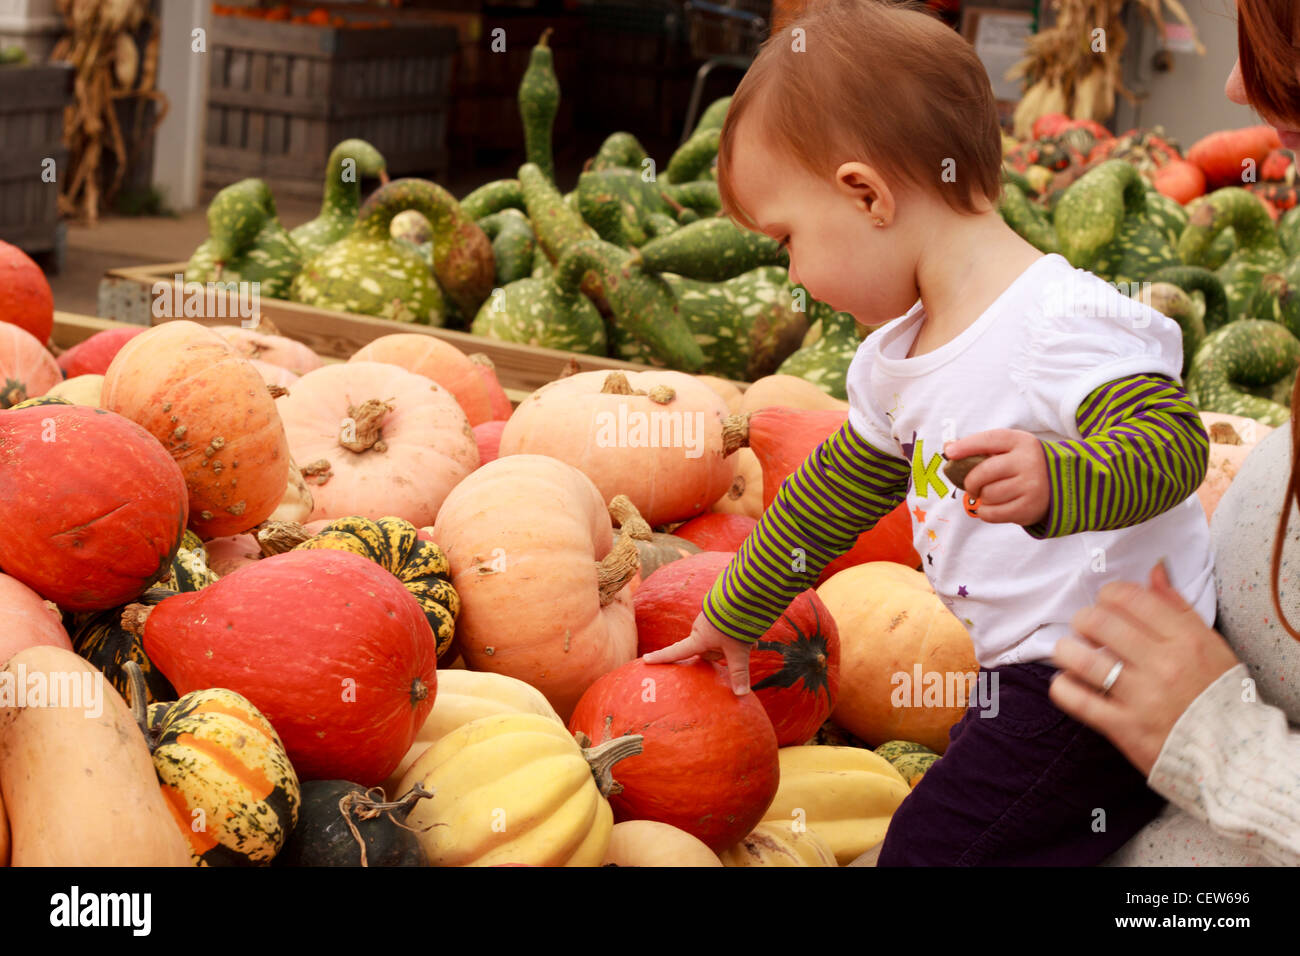 Child touching an orange gourd at a farmer's market Stock Photo